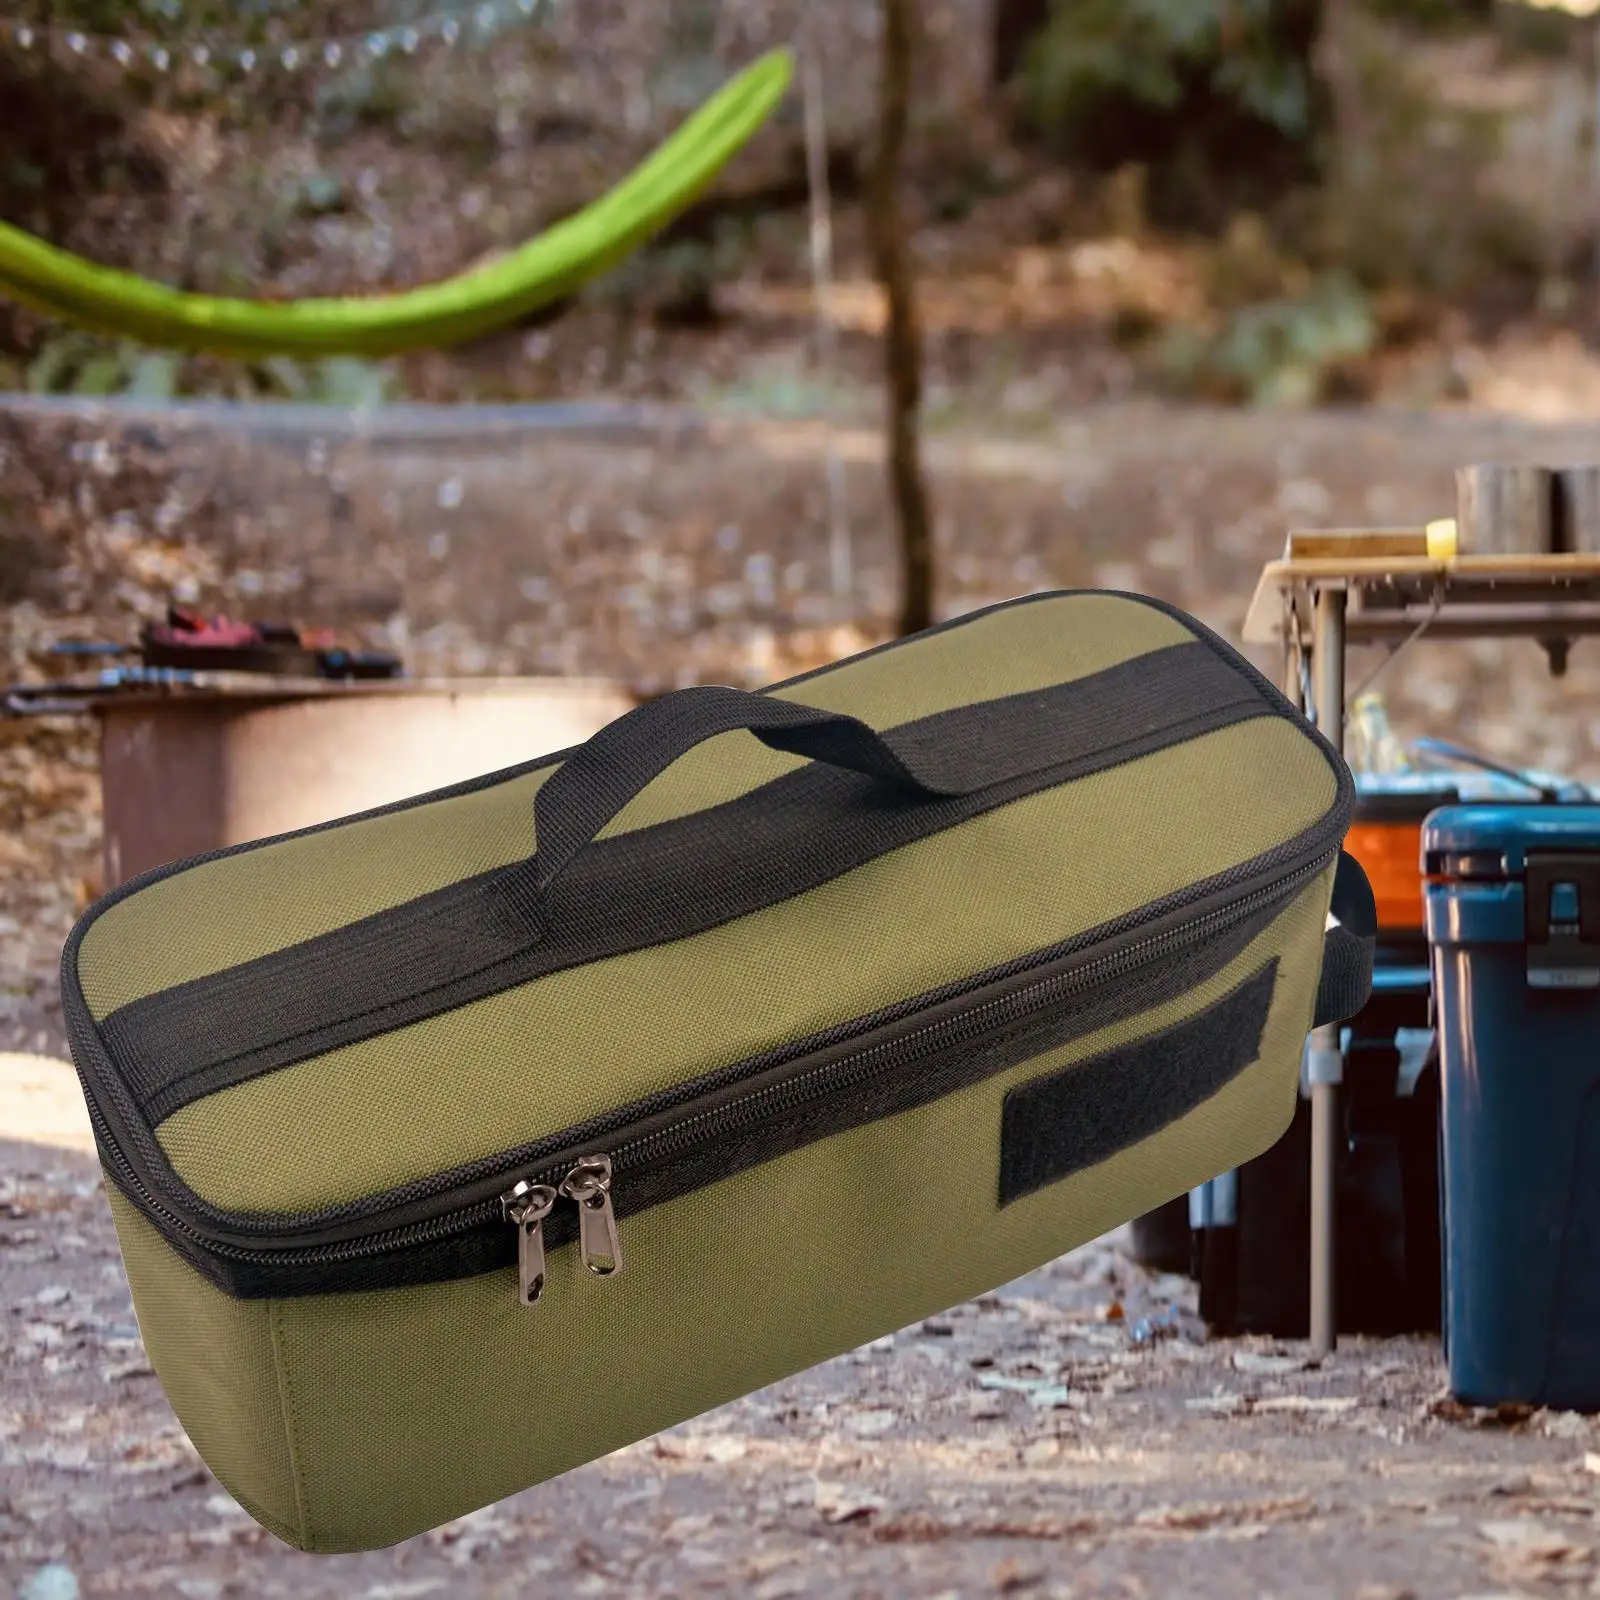 Lightweight Camping Tableware Storage Bag Travel Bag for Cookware Kitchen Travel